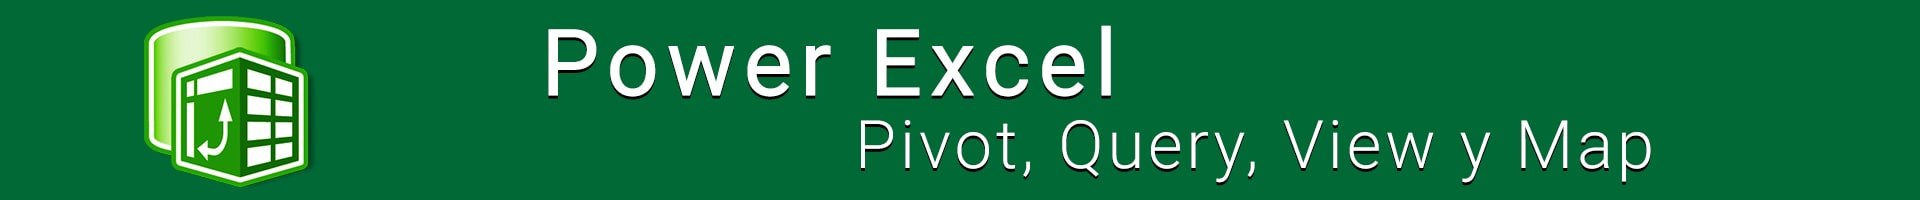 Curso online Power Excel: Pivot, Query, View y Map. Conviértete en un experto man